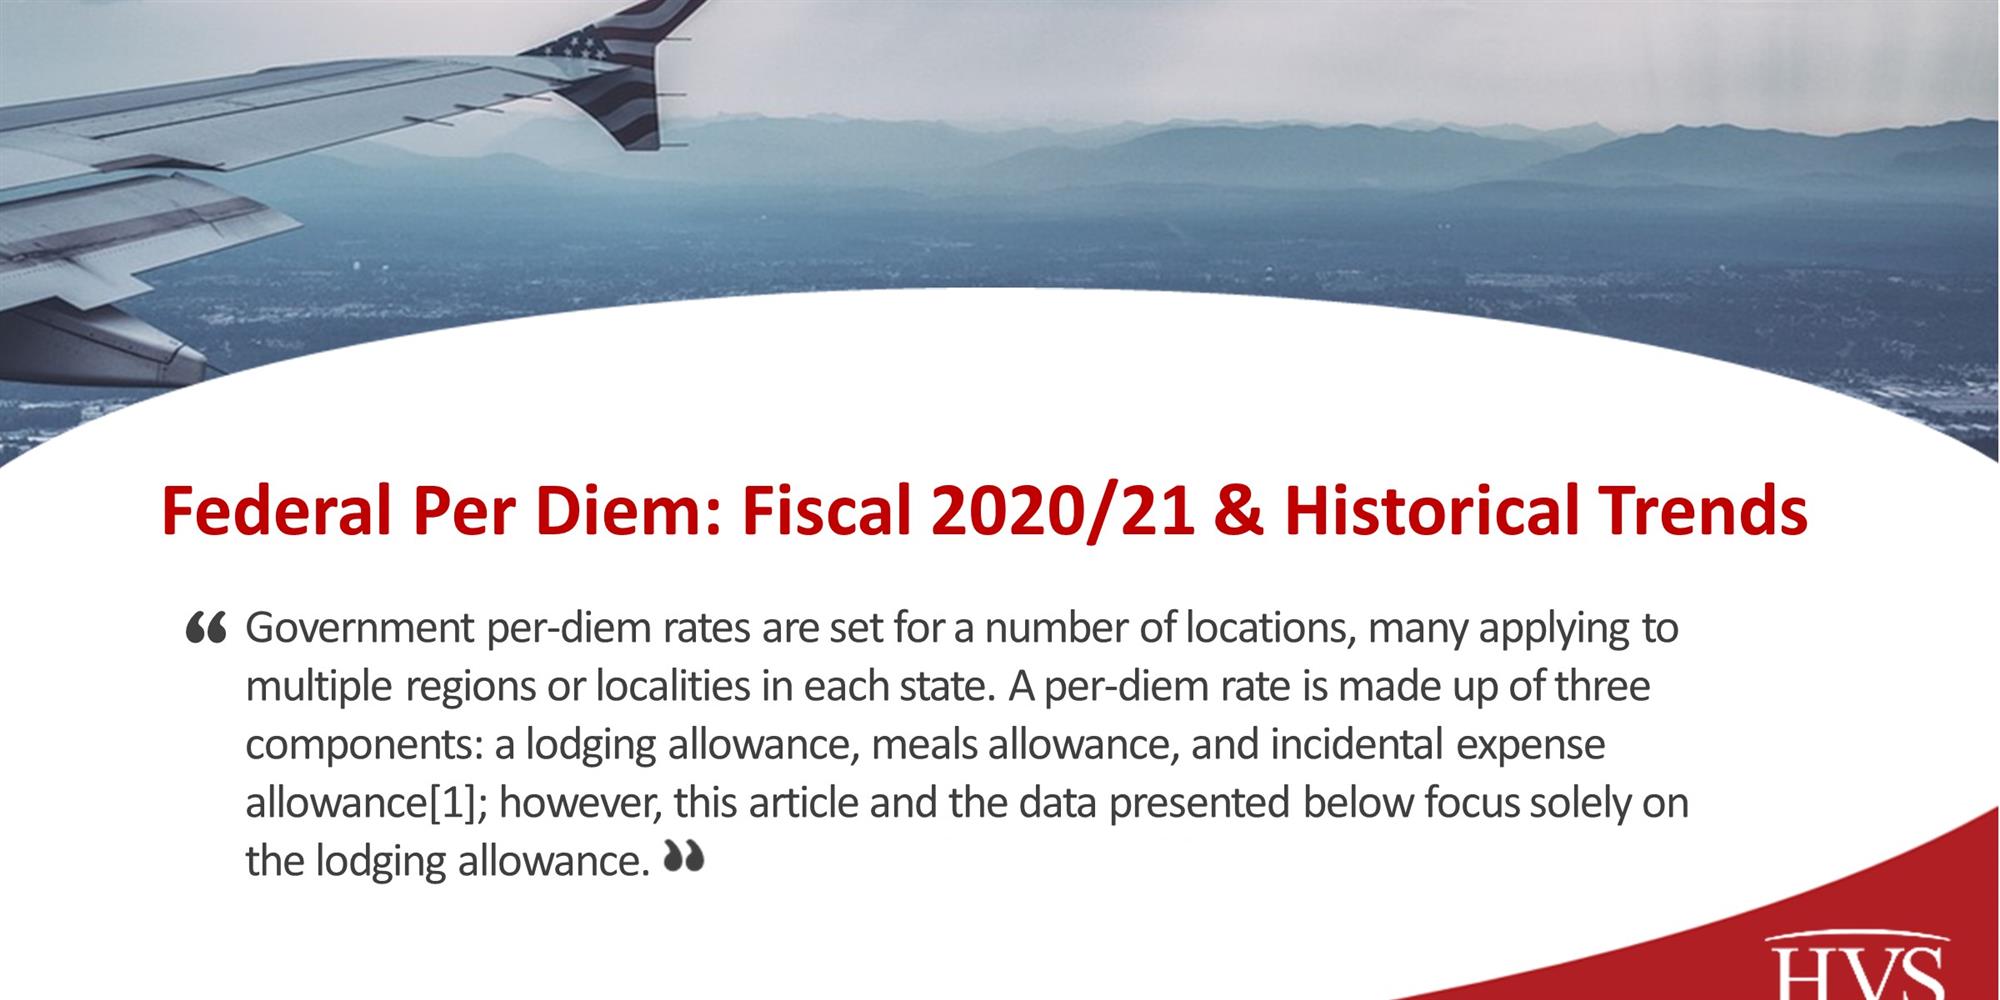 HVS Federal Per Diem Fiscal 2020/21 & Historical Trends